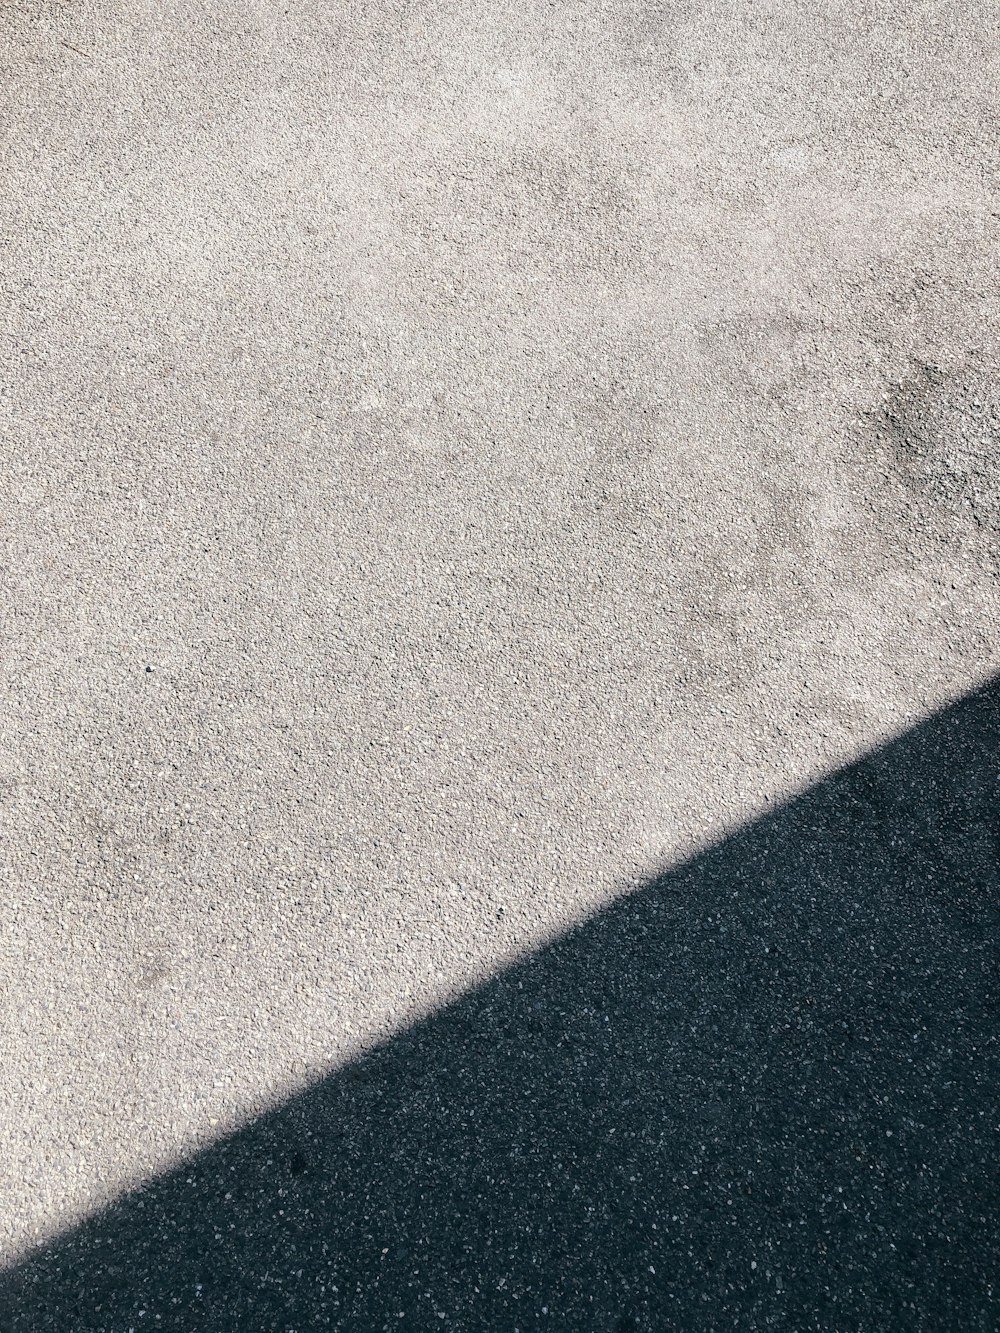 têxtil preto no piso de concreto cinza